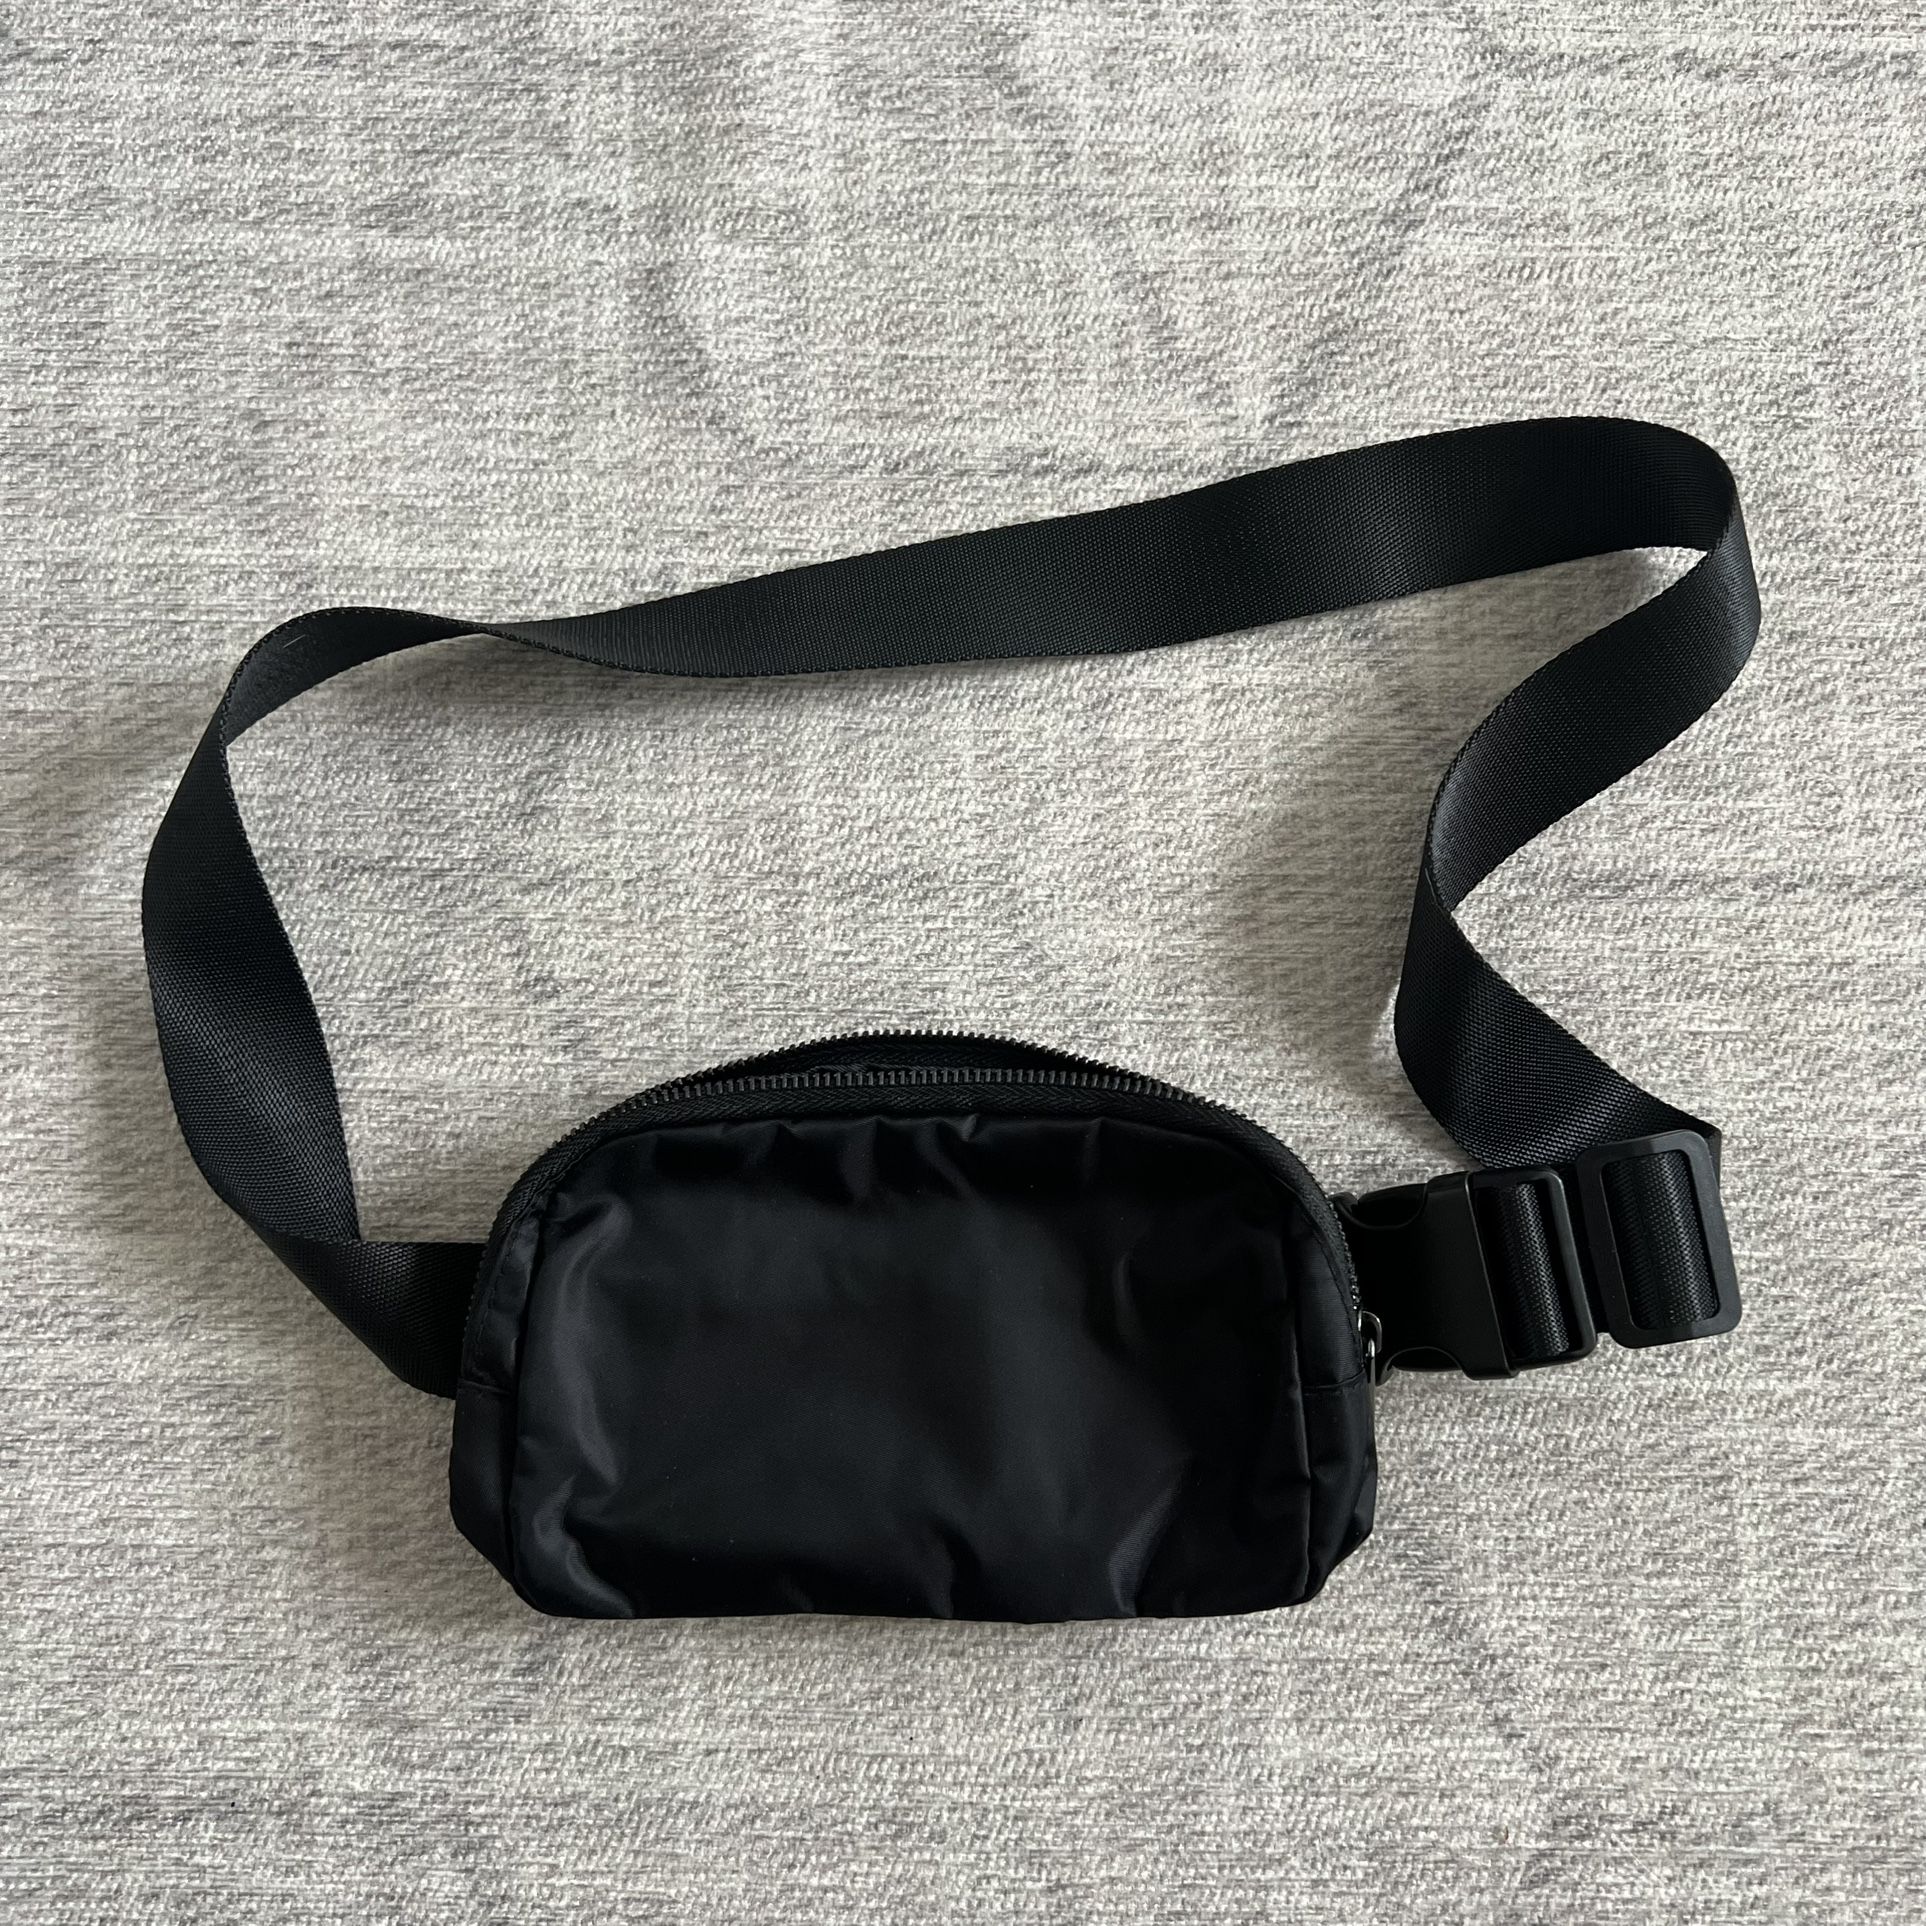 Black Adult Unisex Casual Athletic Fanny Pack Hobo Waist Belt Bag